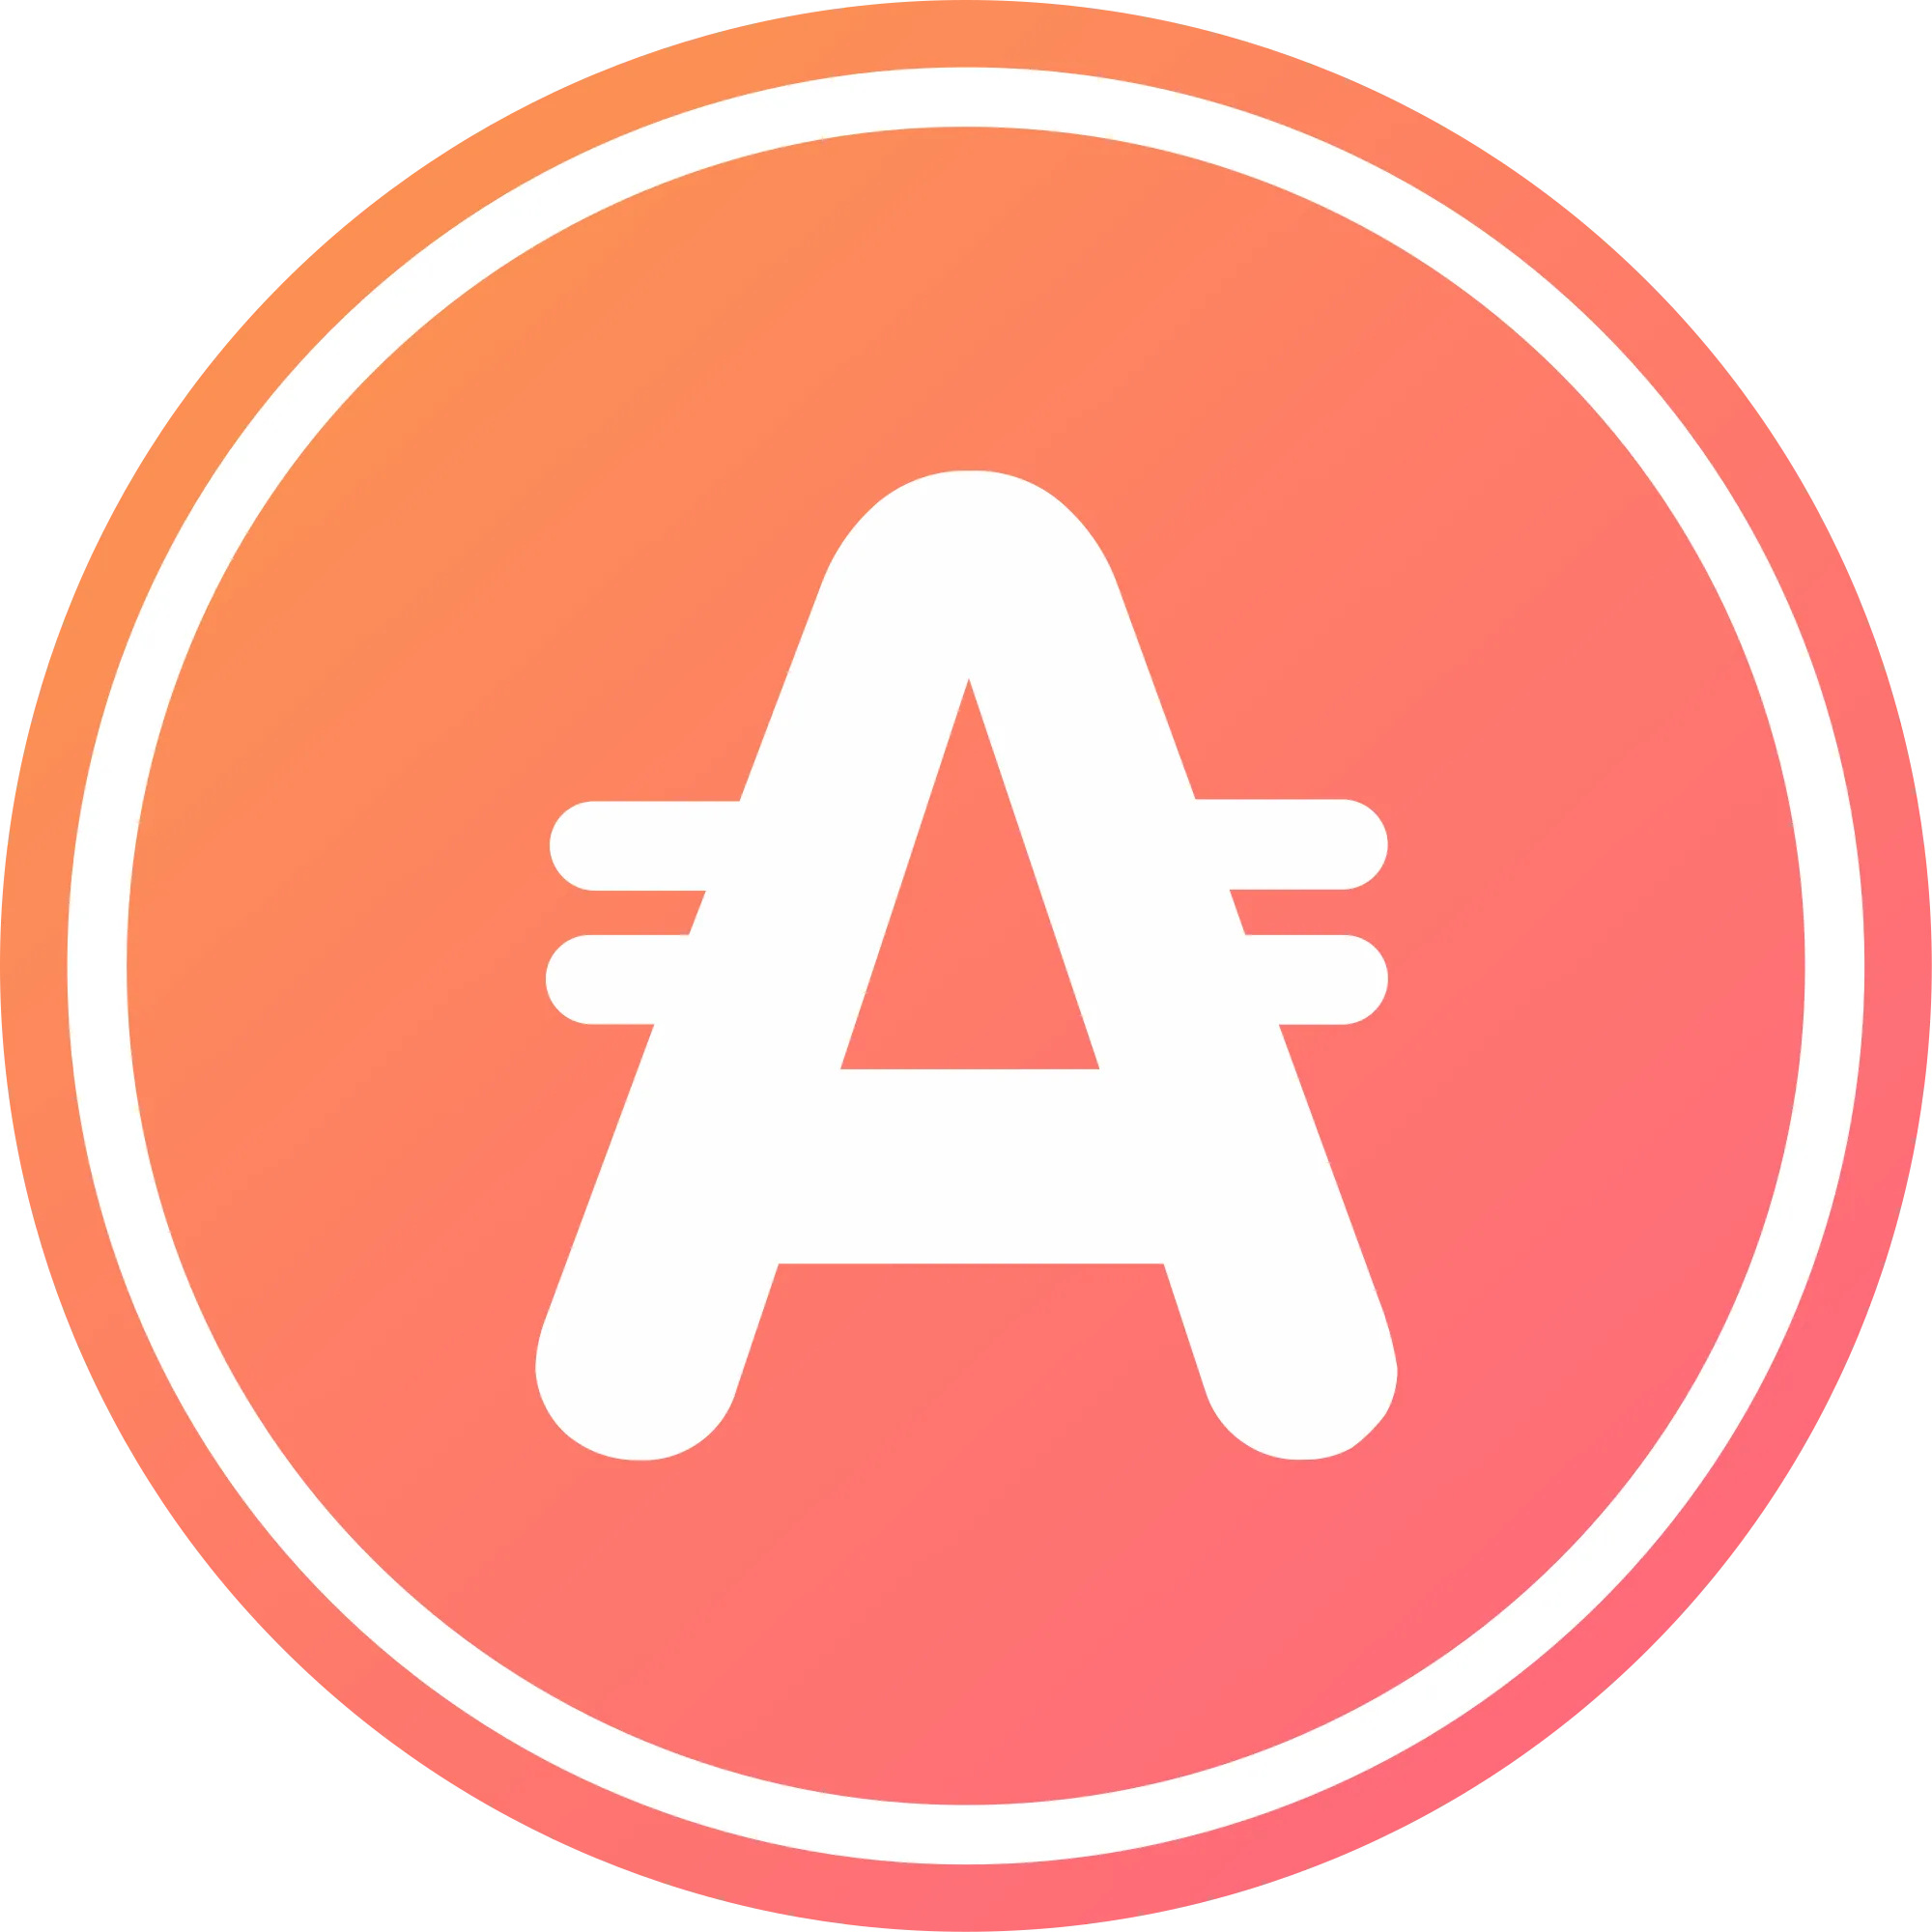 AppCoins logo in png format